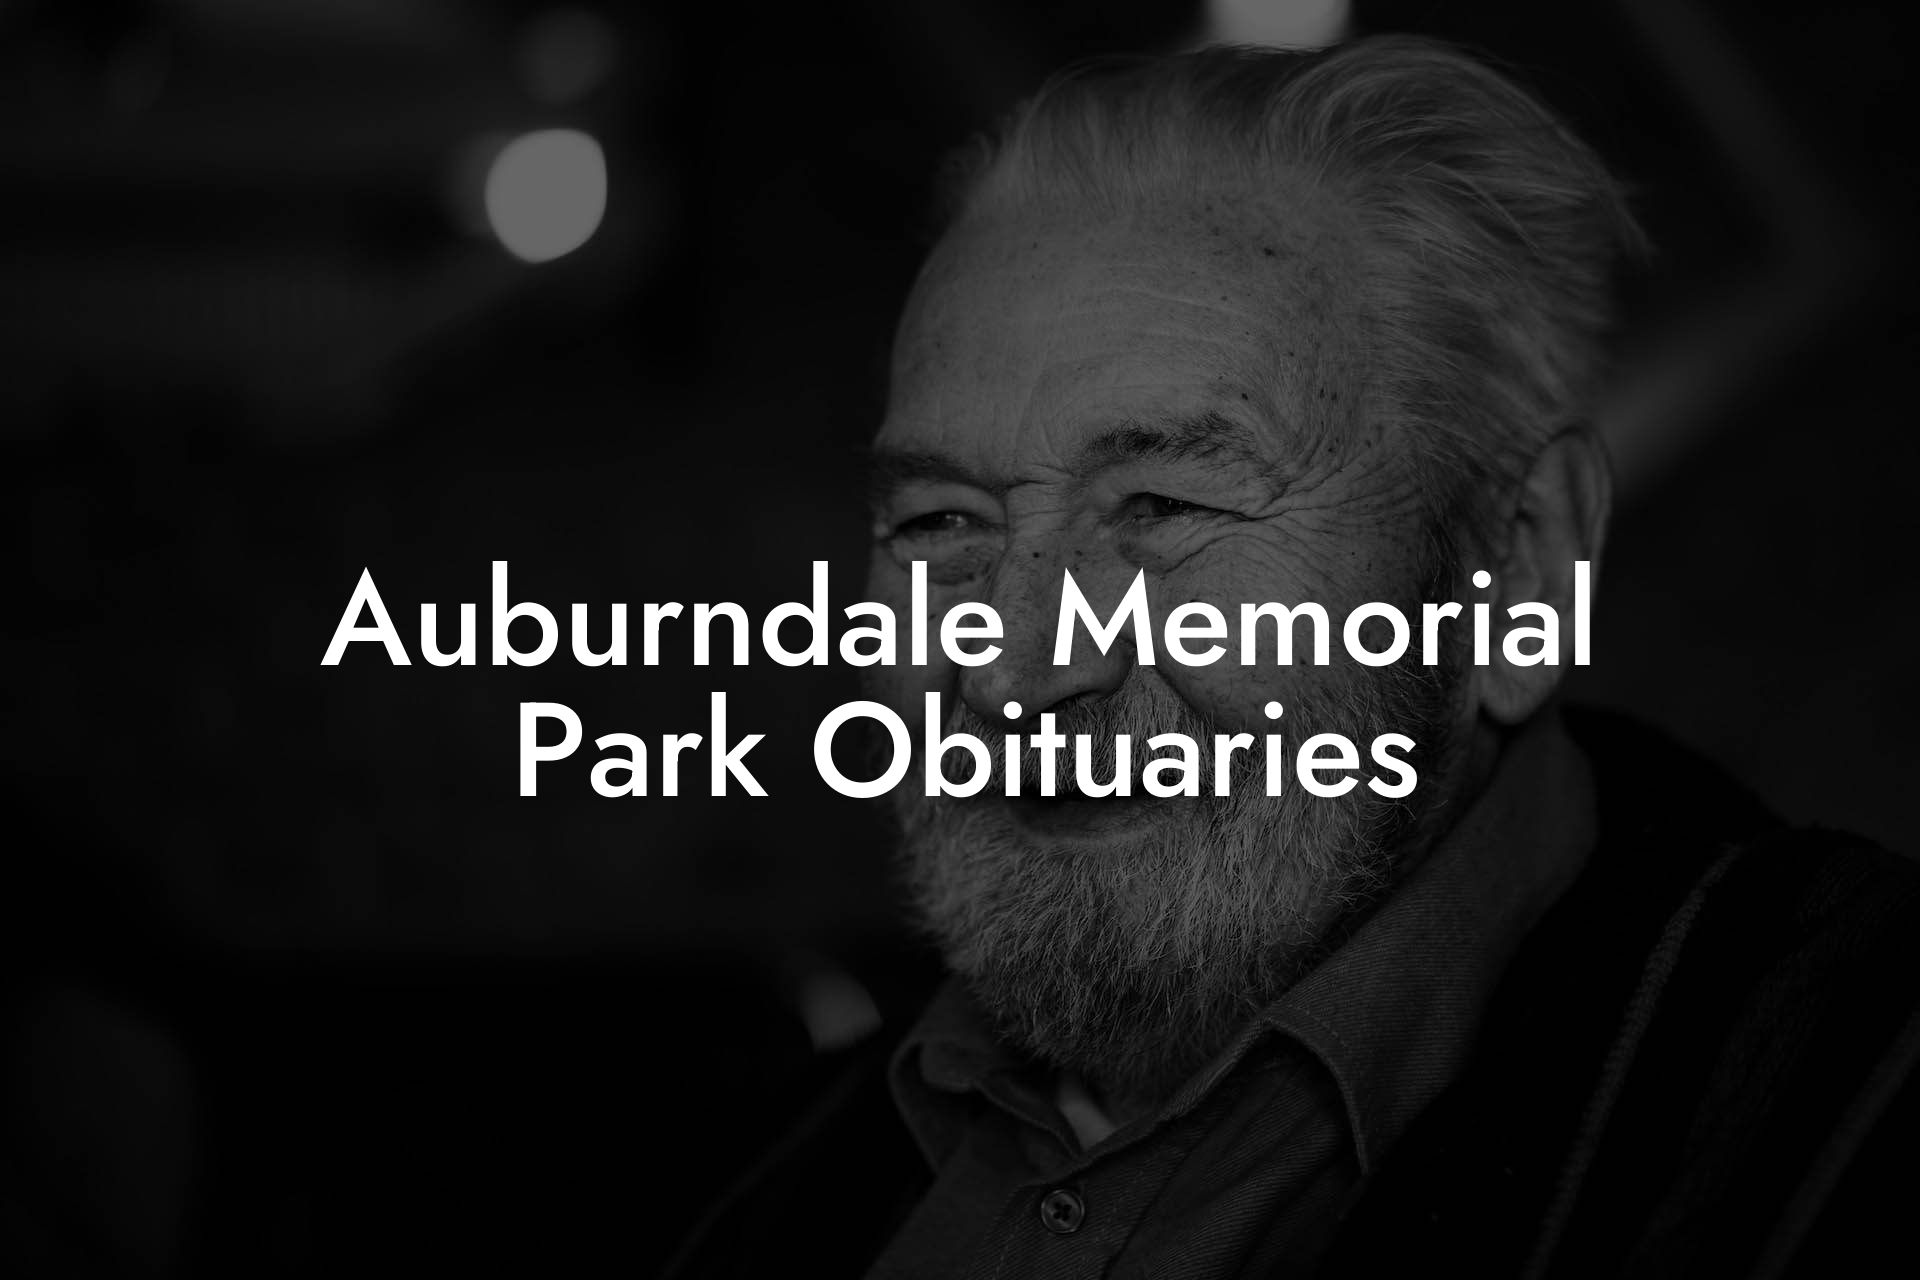 Auburndale Memorial Park Obituaries